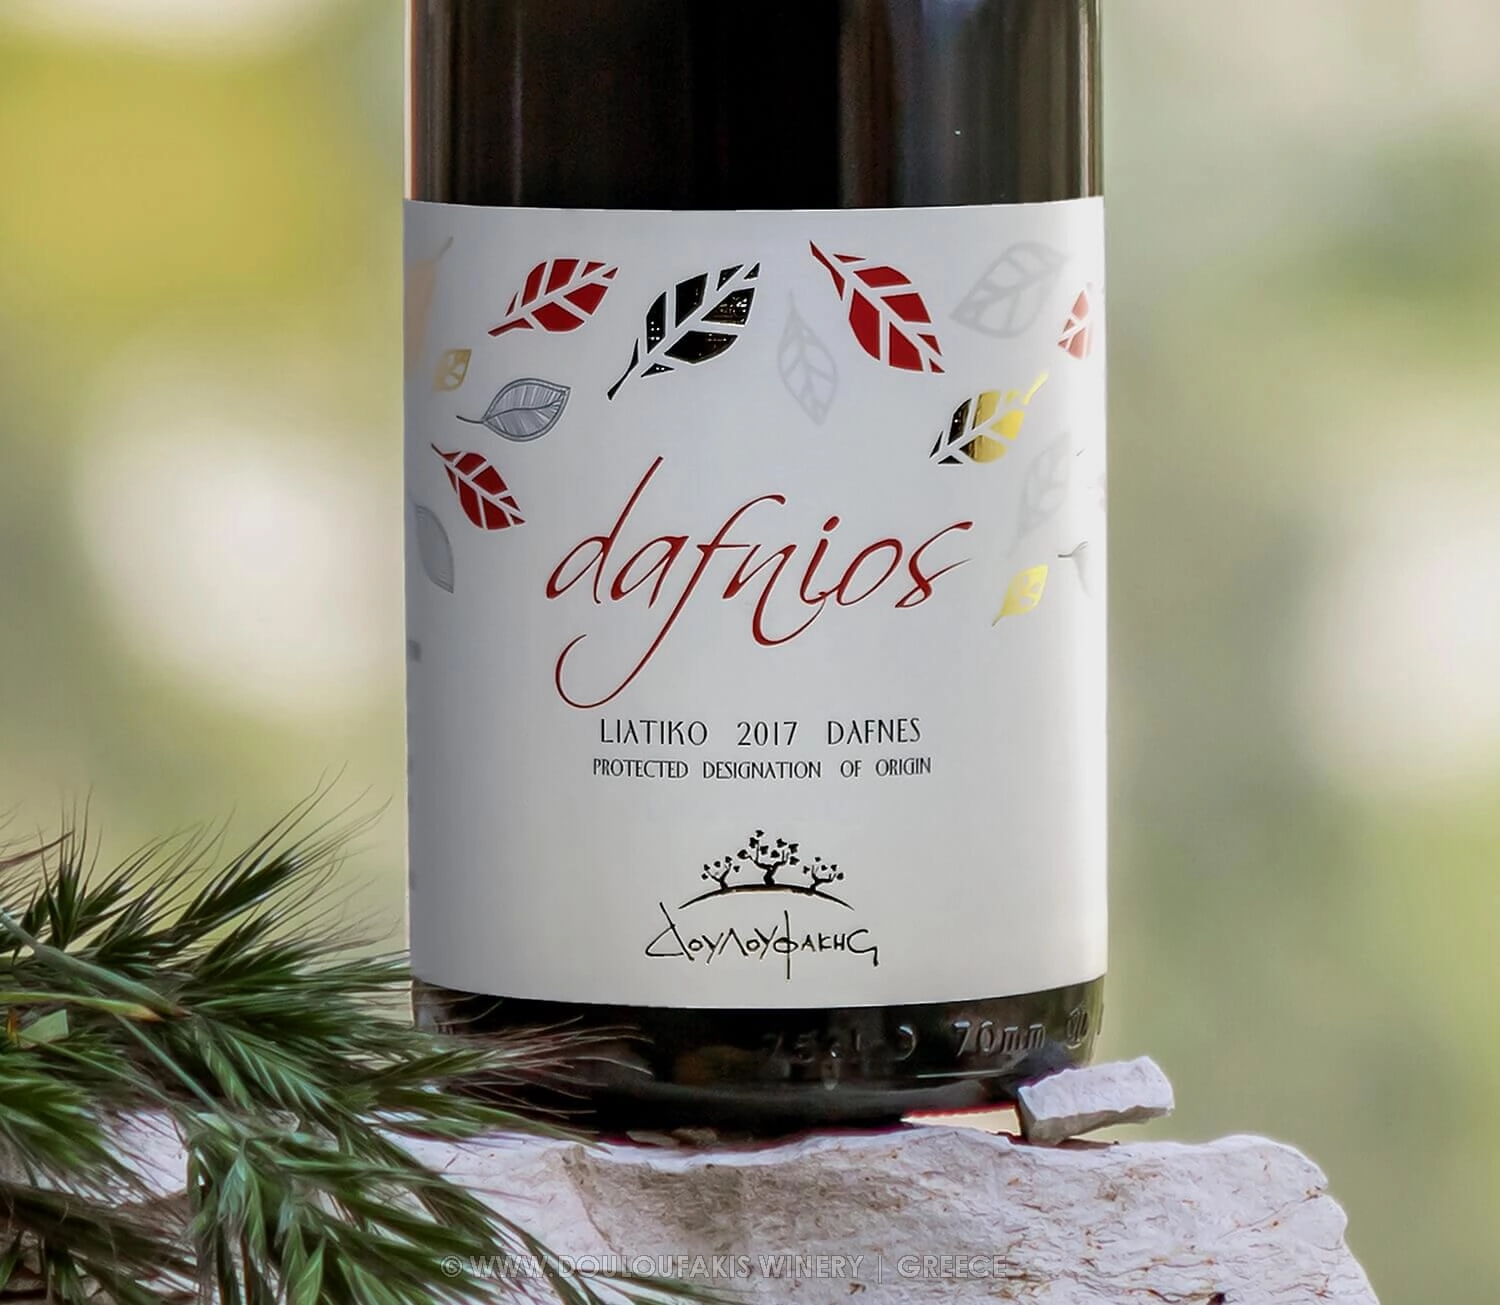 What must a Greek Liatiko wine label write on